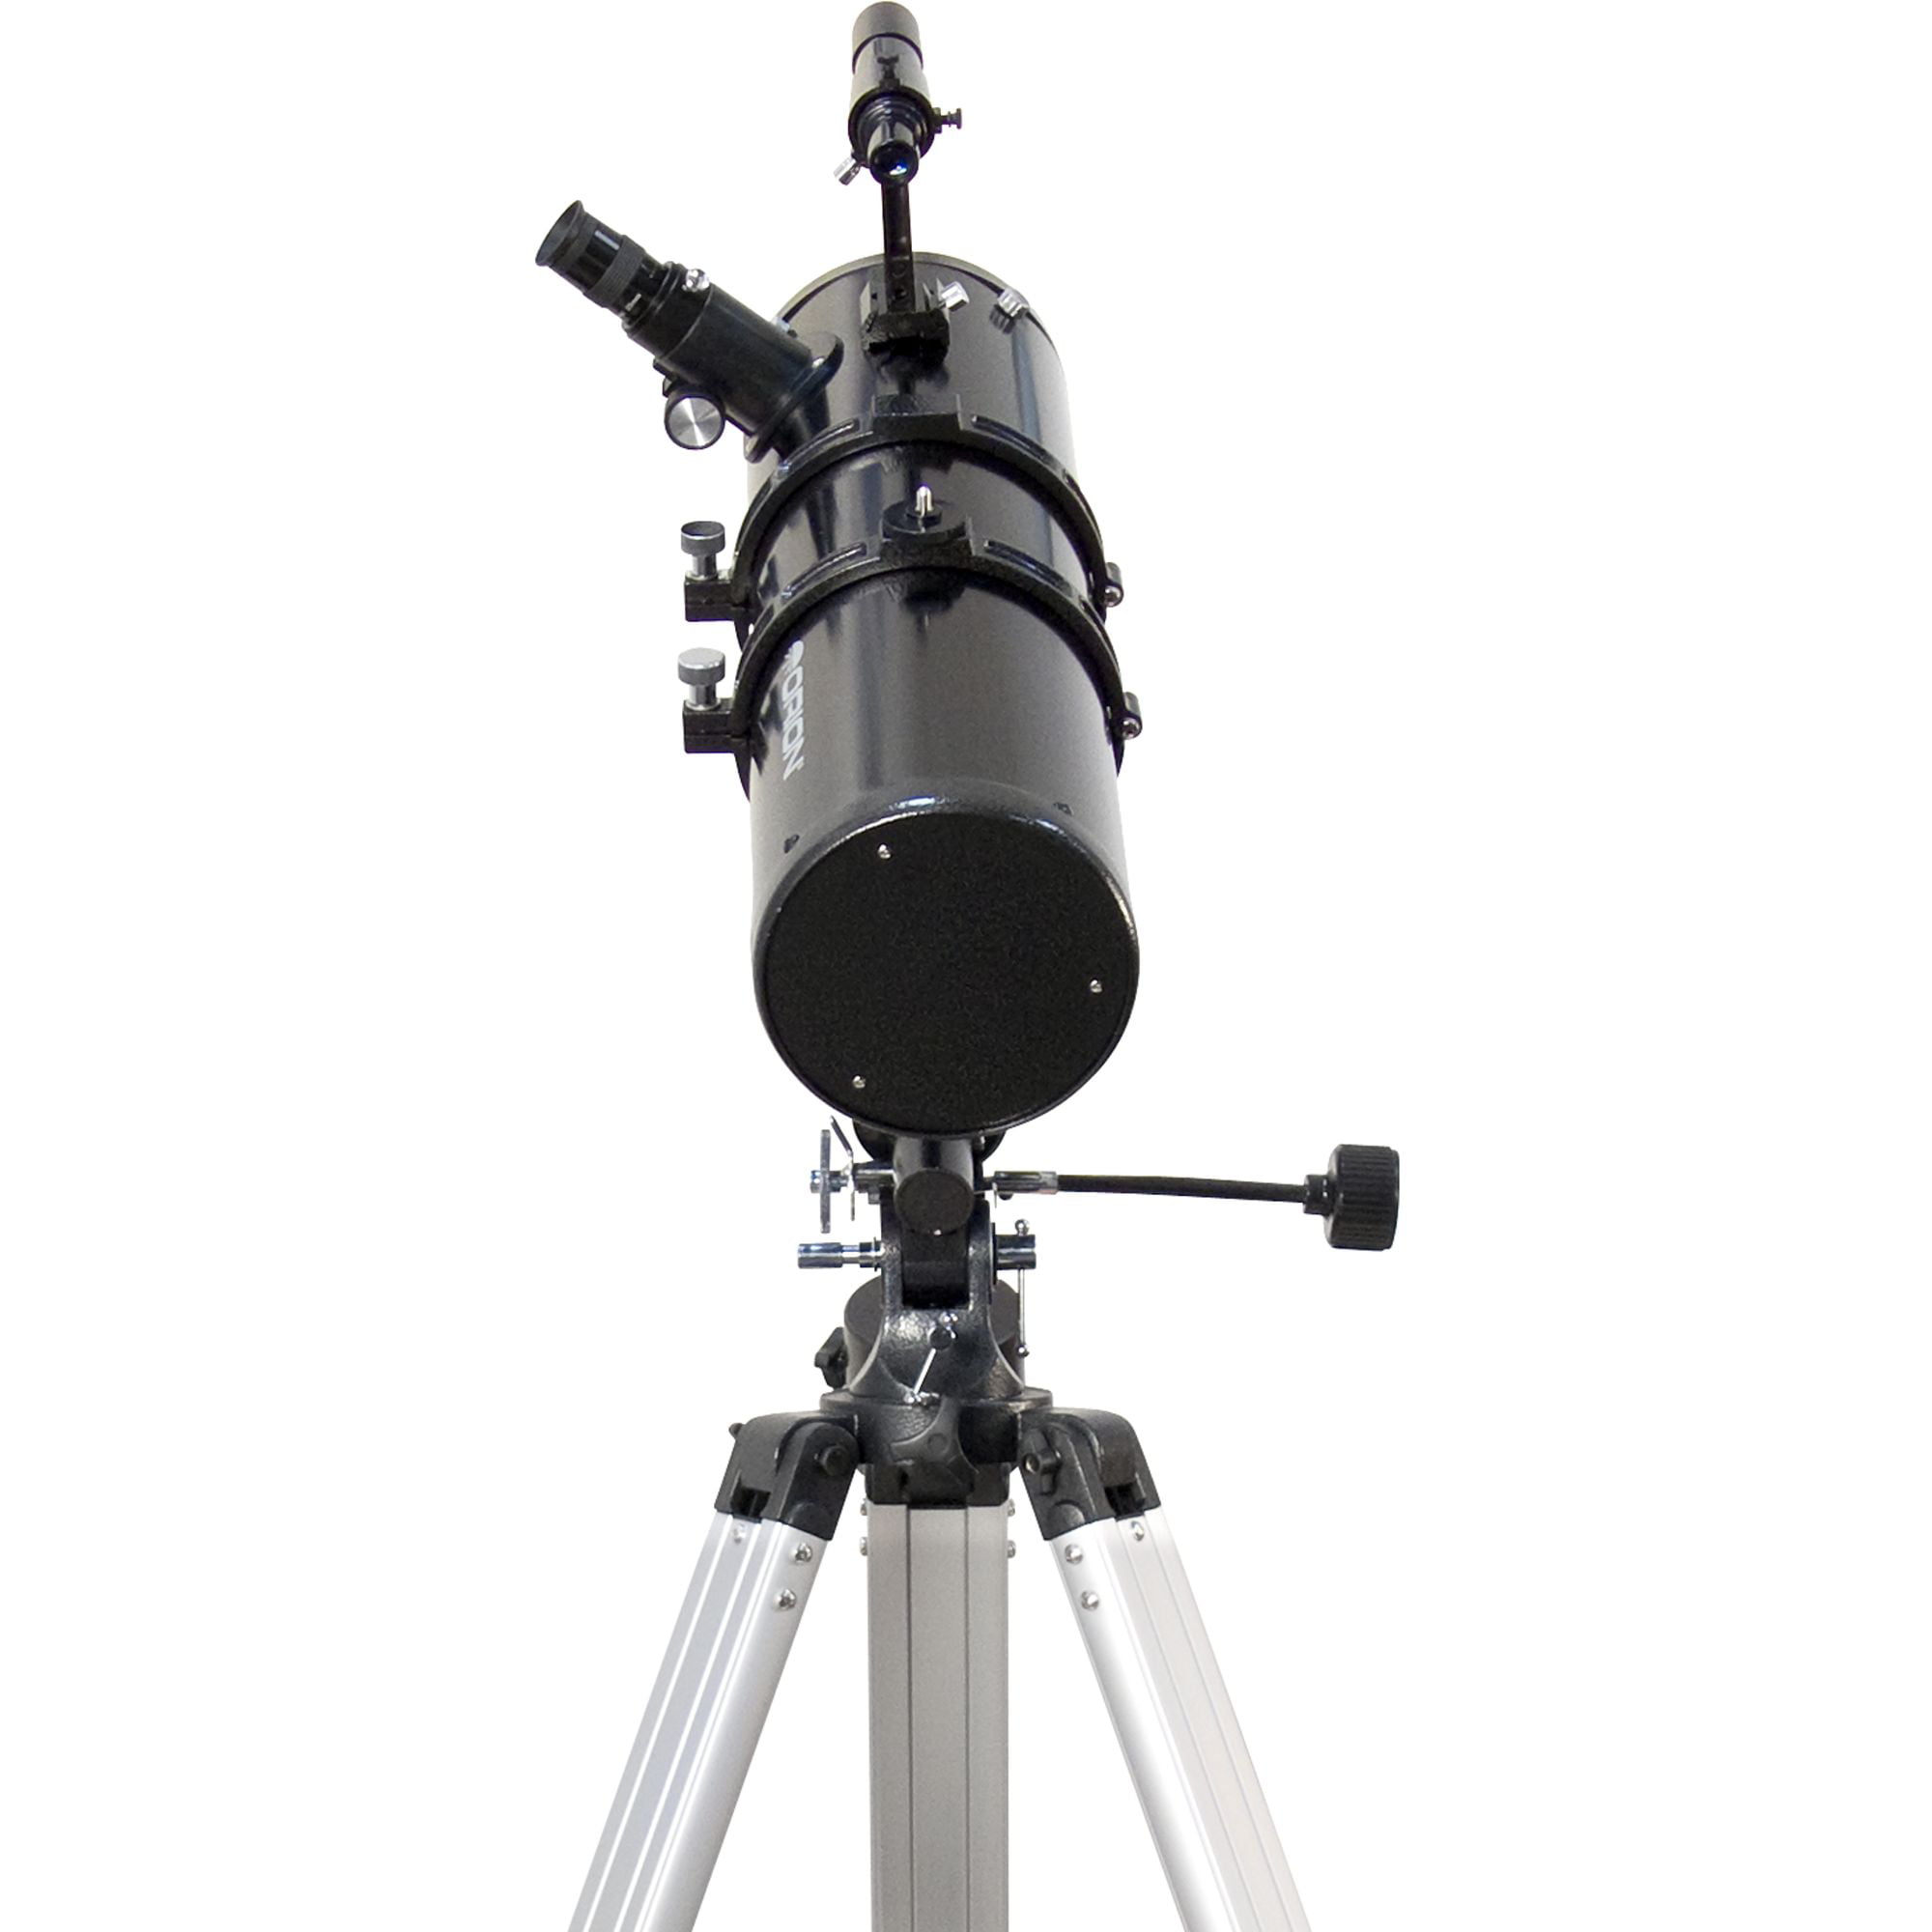 orion 09007 spaceprobe 130st equatorial reflector telescope